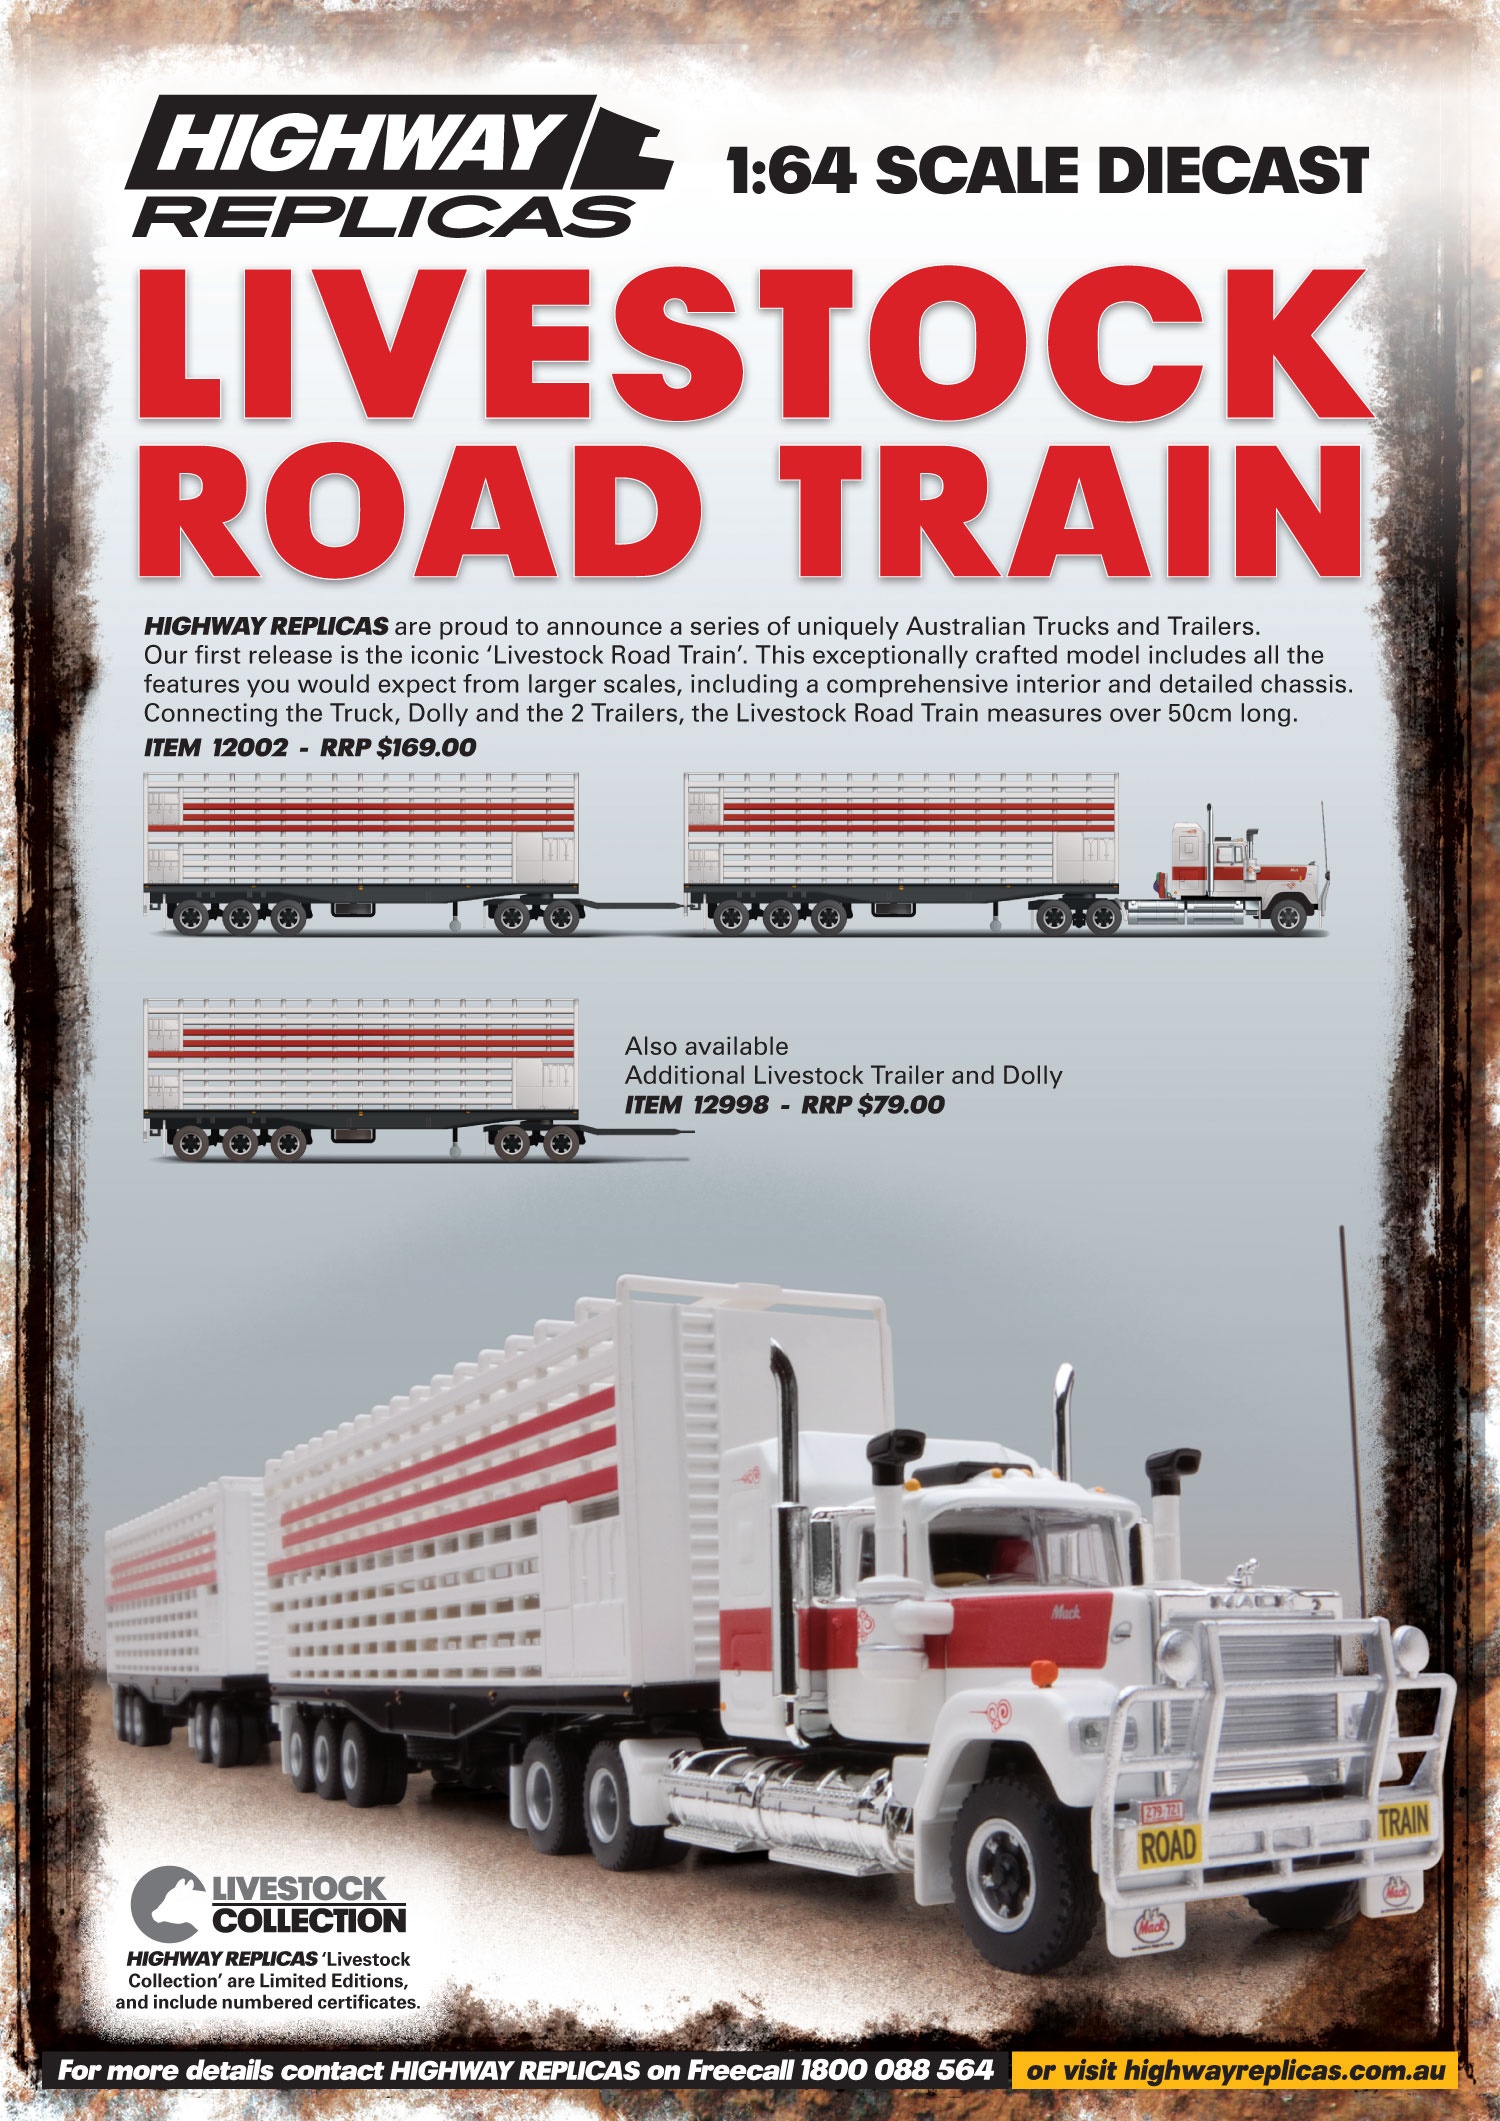 PRE ORDER - Highway Replicas Livestock Road Train Red & White Die Cast Model Truck 1:64 (FULL PRICE - $169.00)